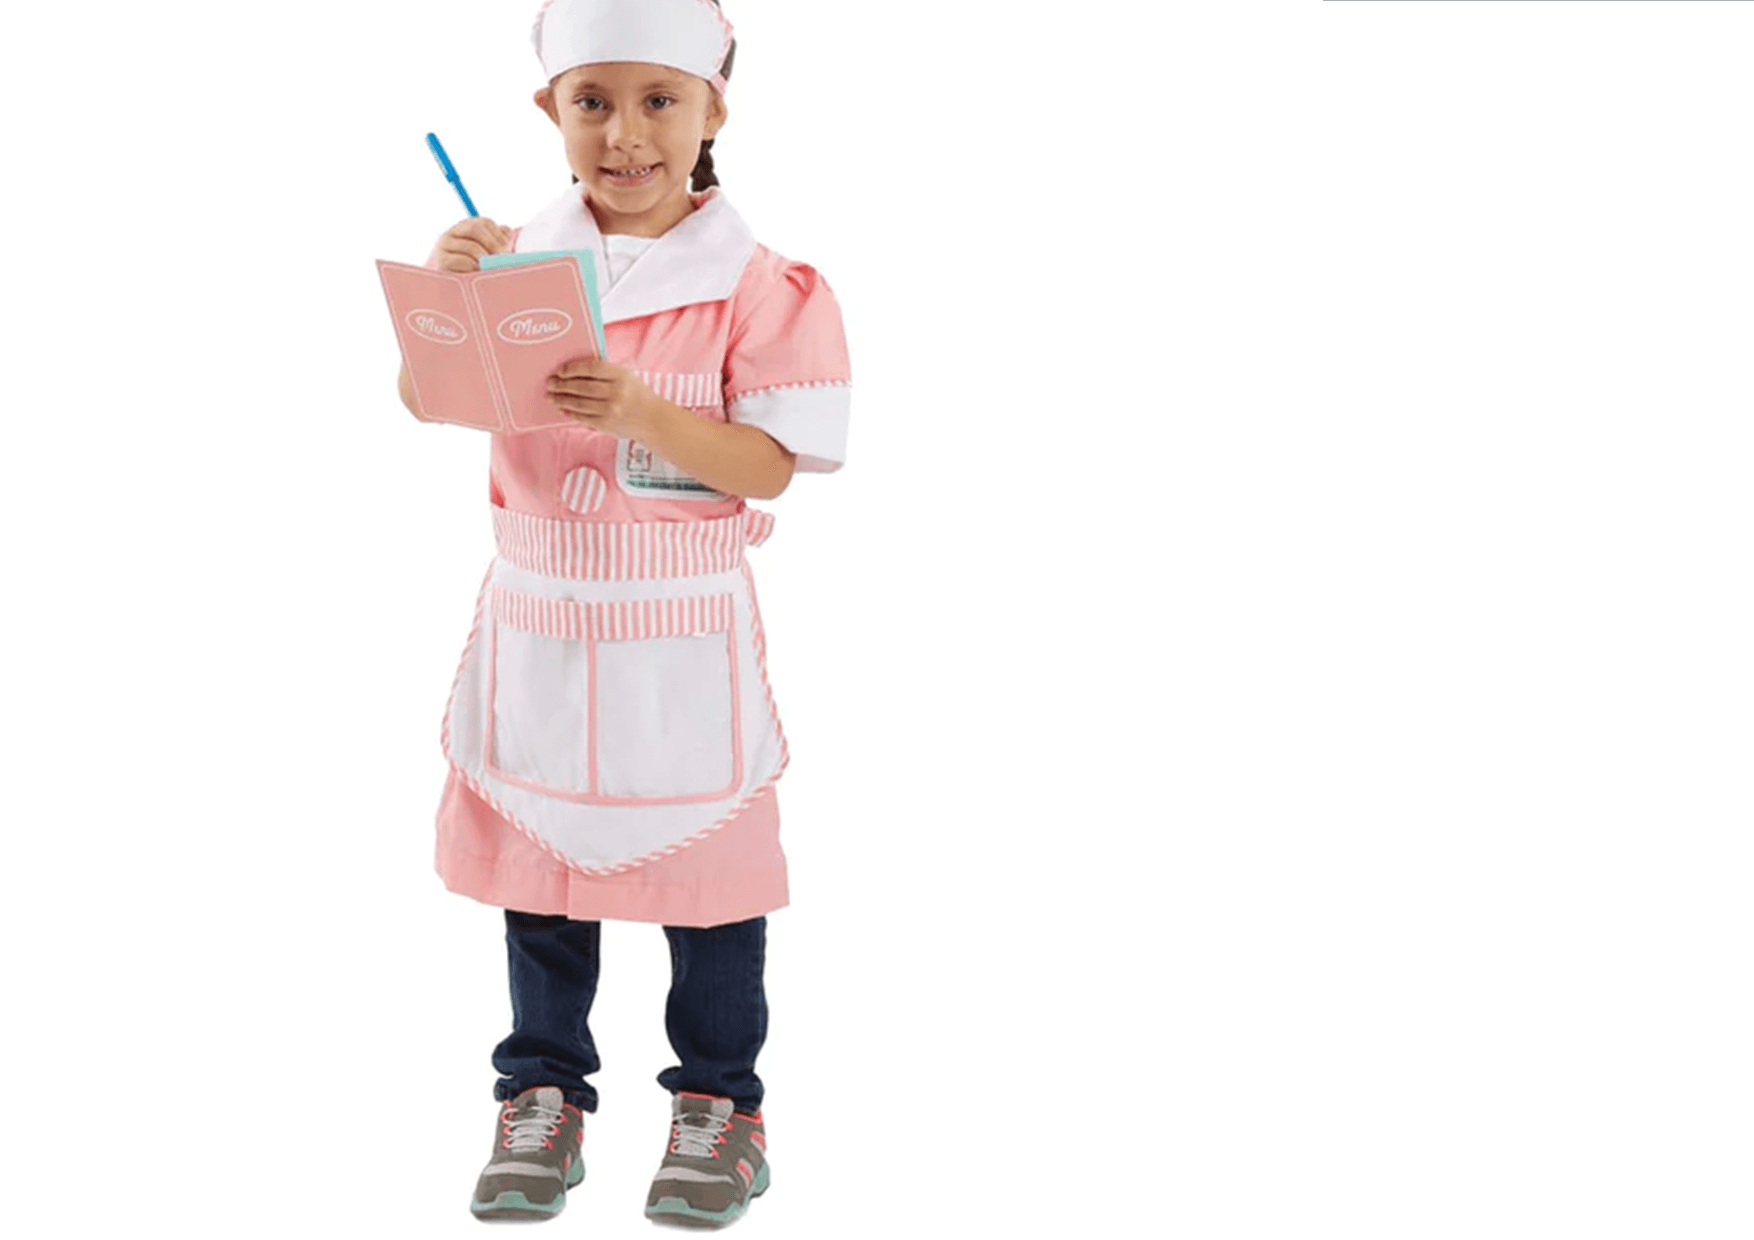 MELISSA & DOUG Waitress Role Play Set: This adorable waitress costume is 